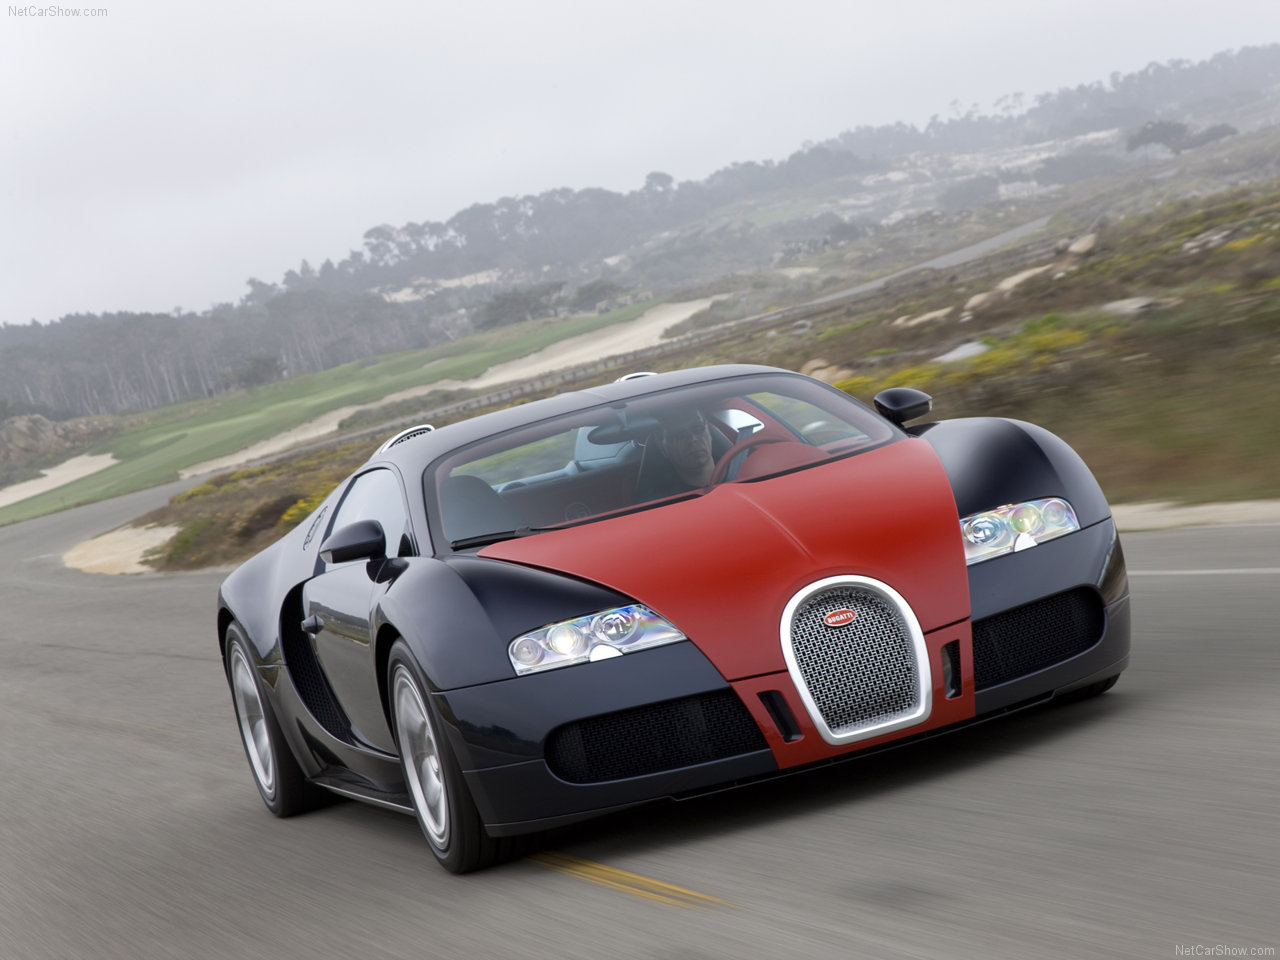  Bugatti-Veyron_Fbg_p